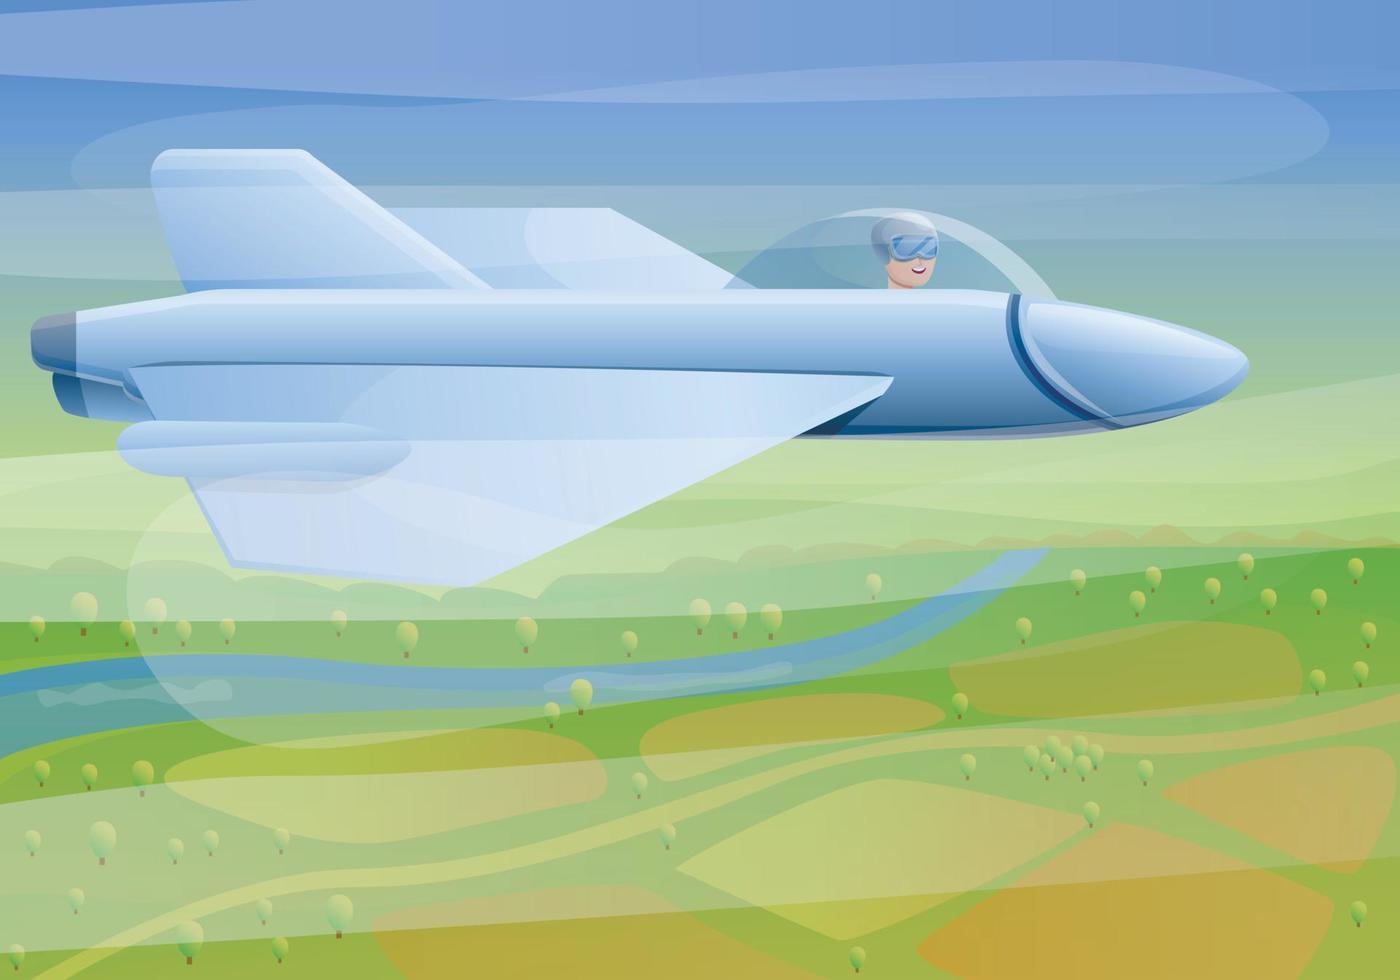 Pilot concept banner, cartoon style vector